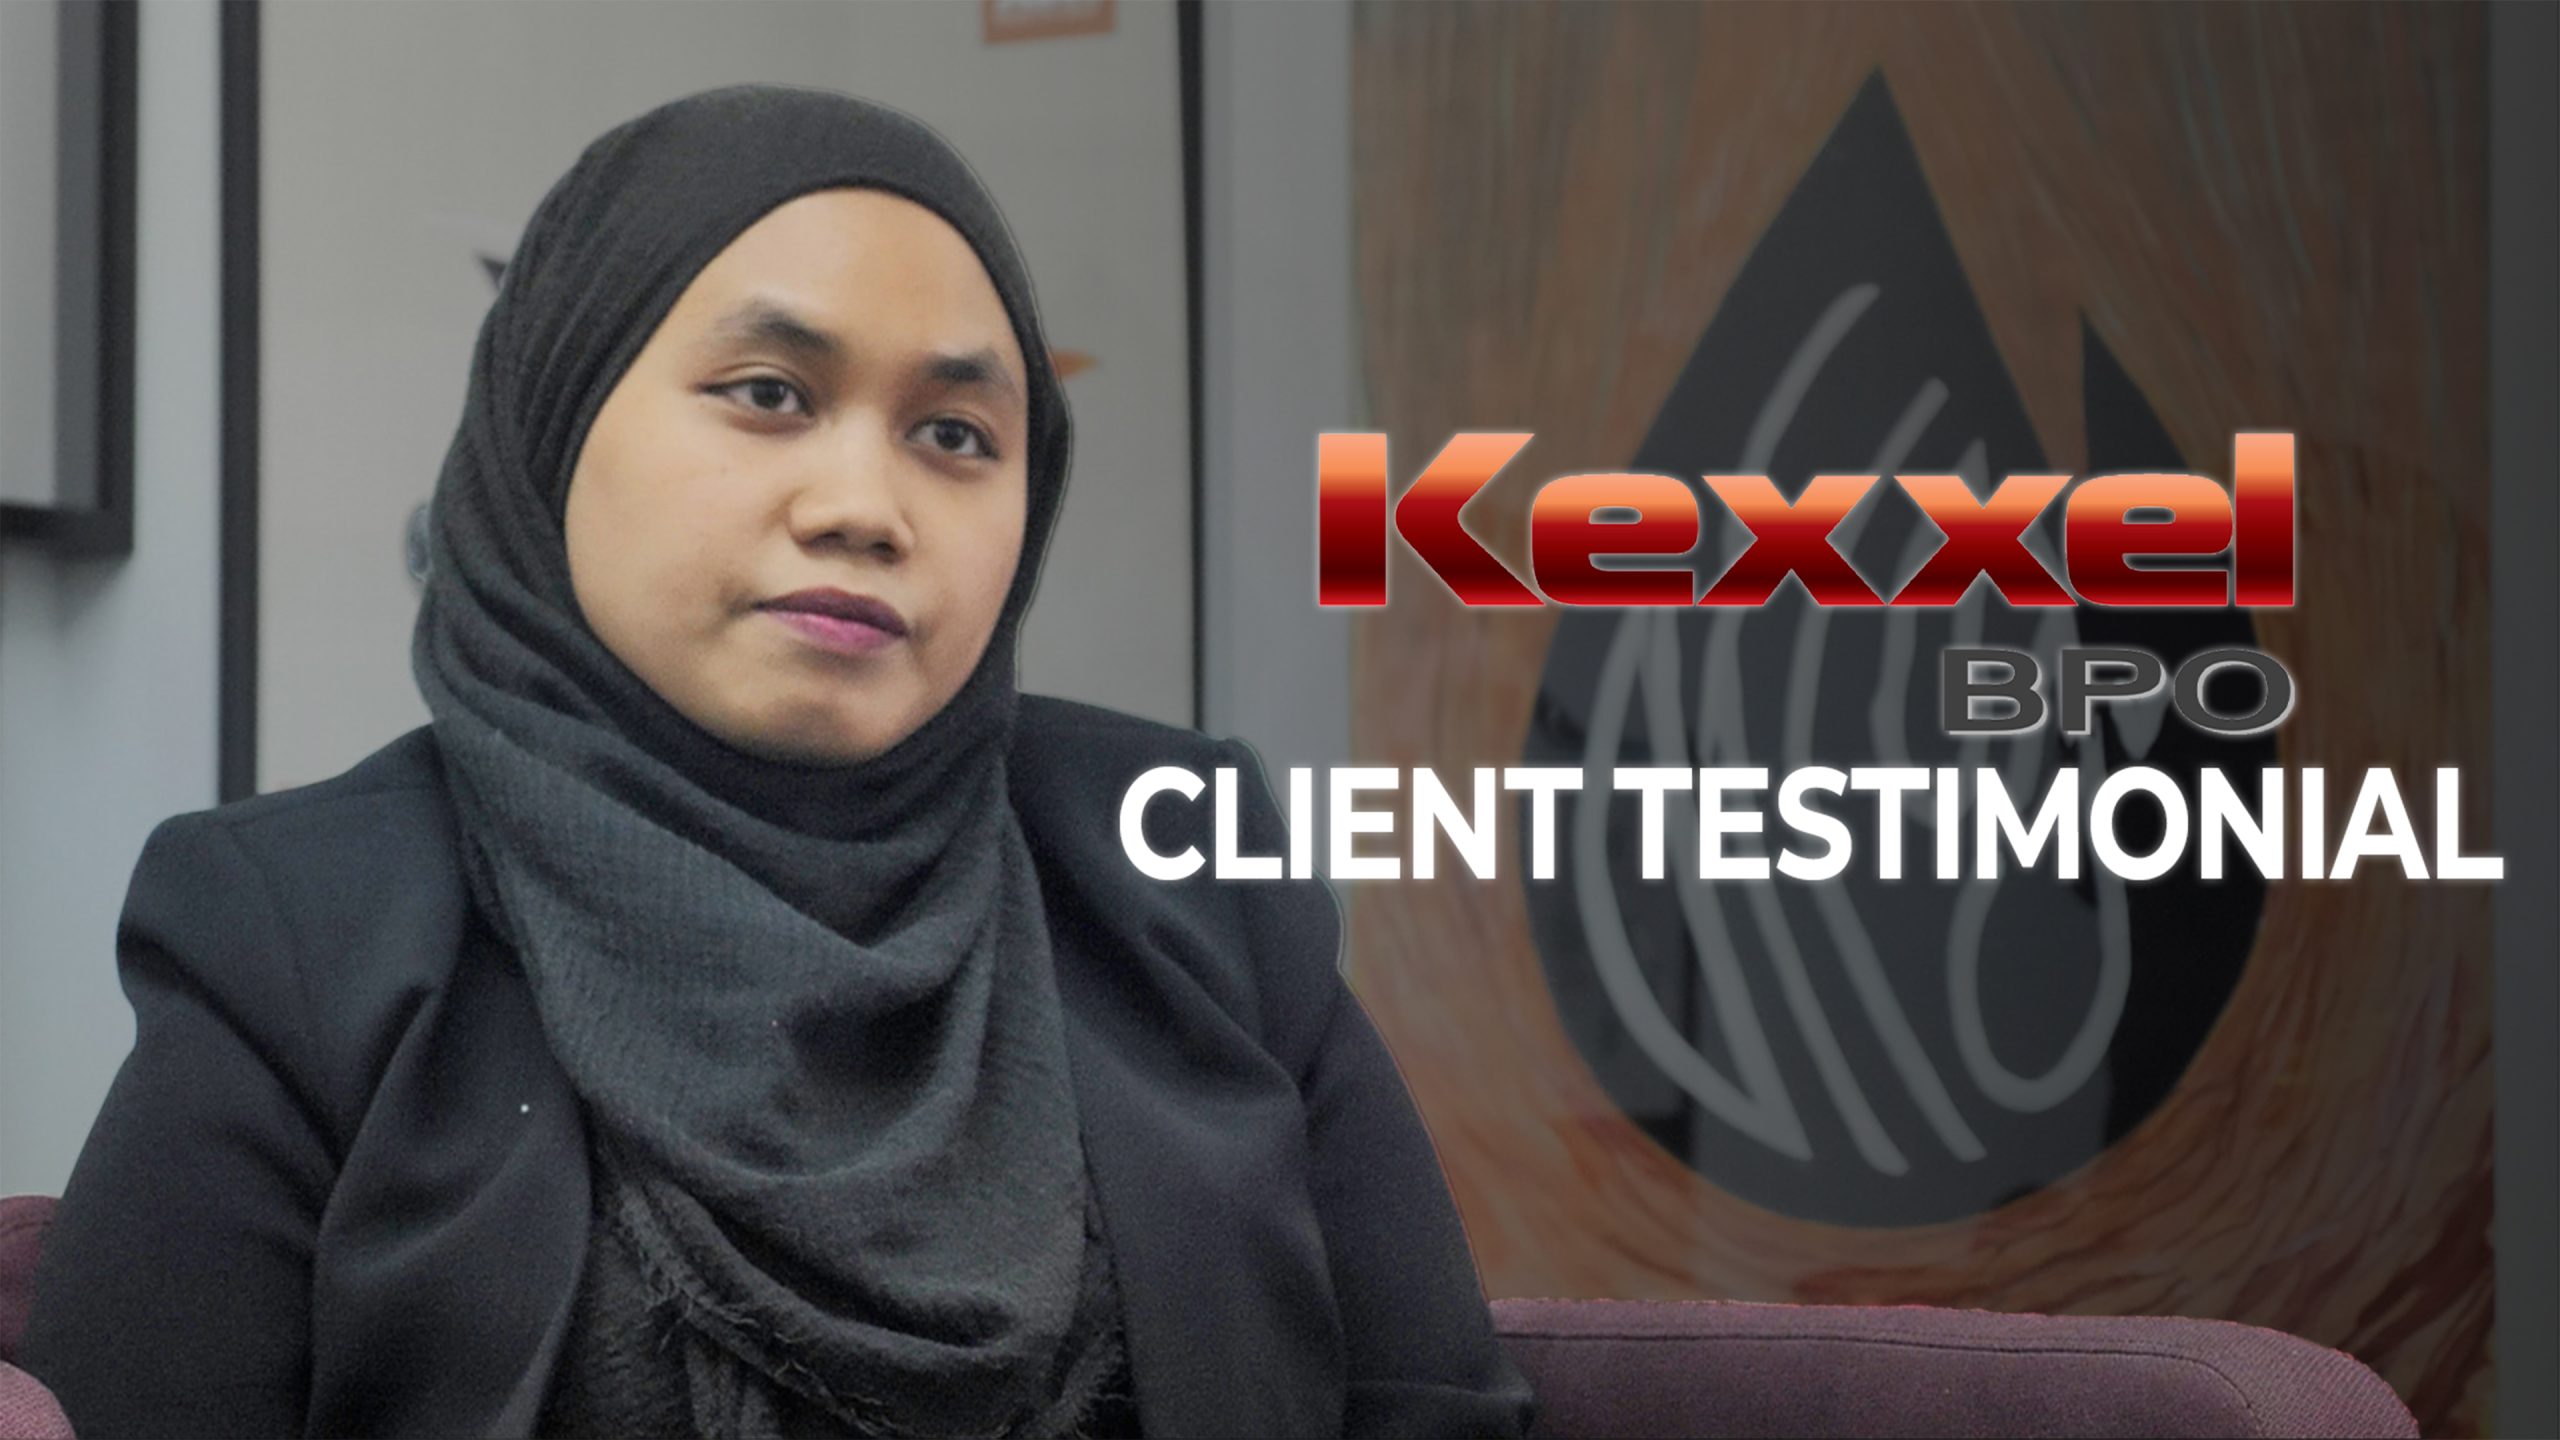 Kexxel BPO Client testimony